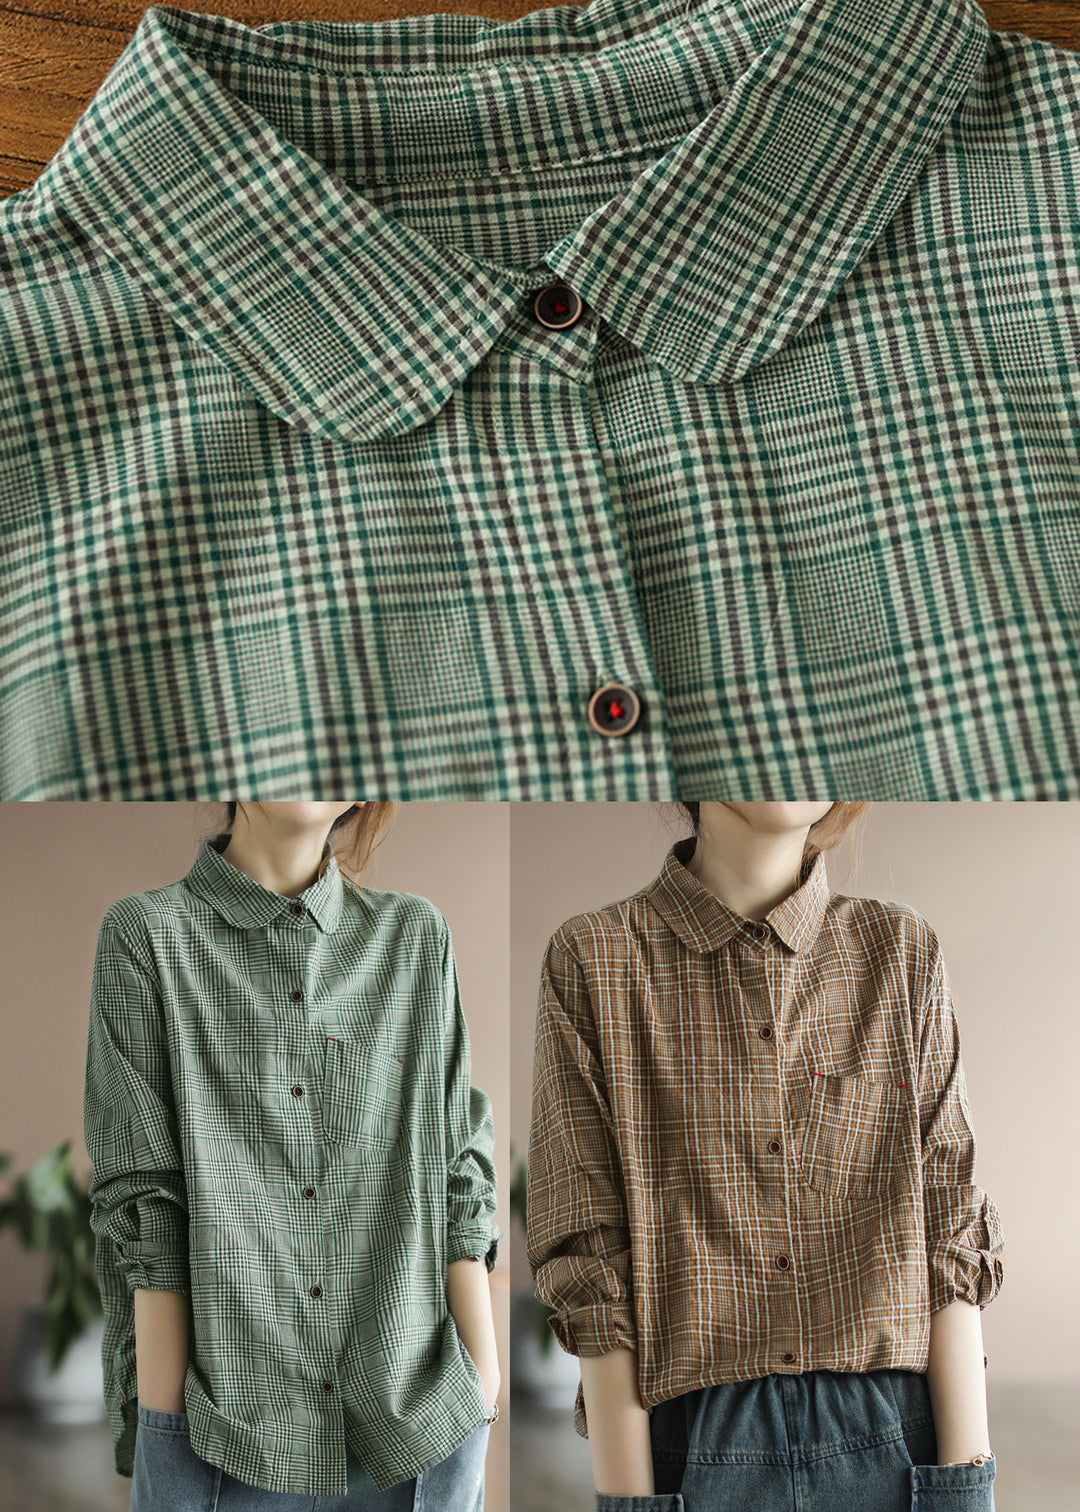 Coffee Plaid Cotton Shirt Tops pocket Long Sleeve